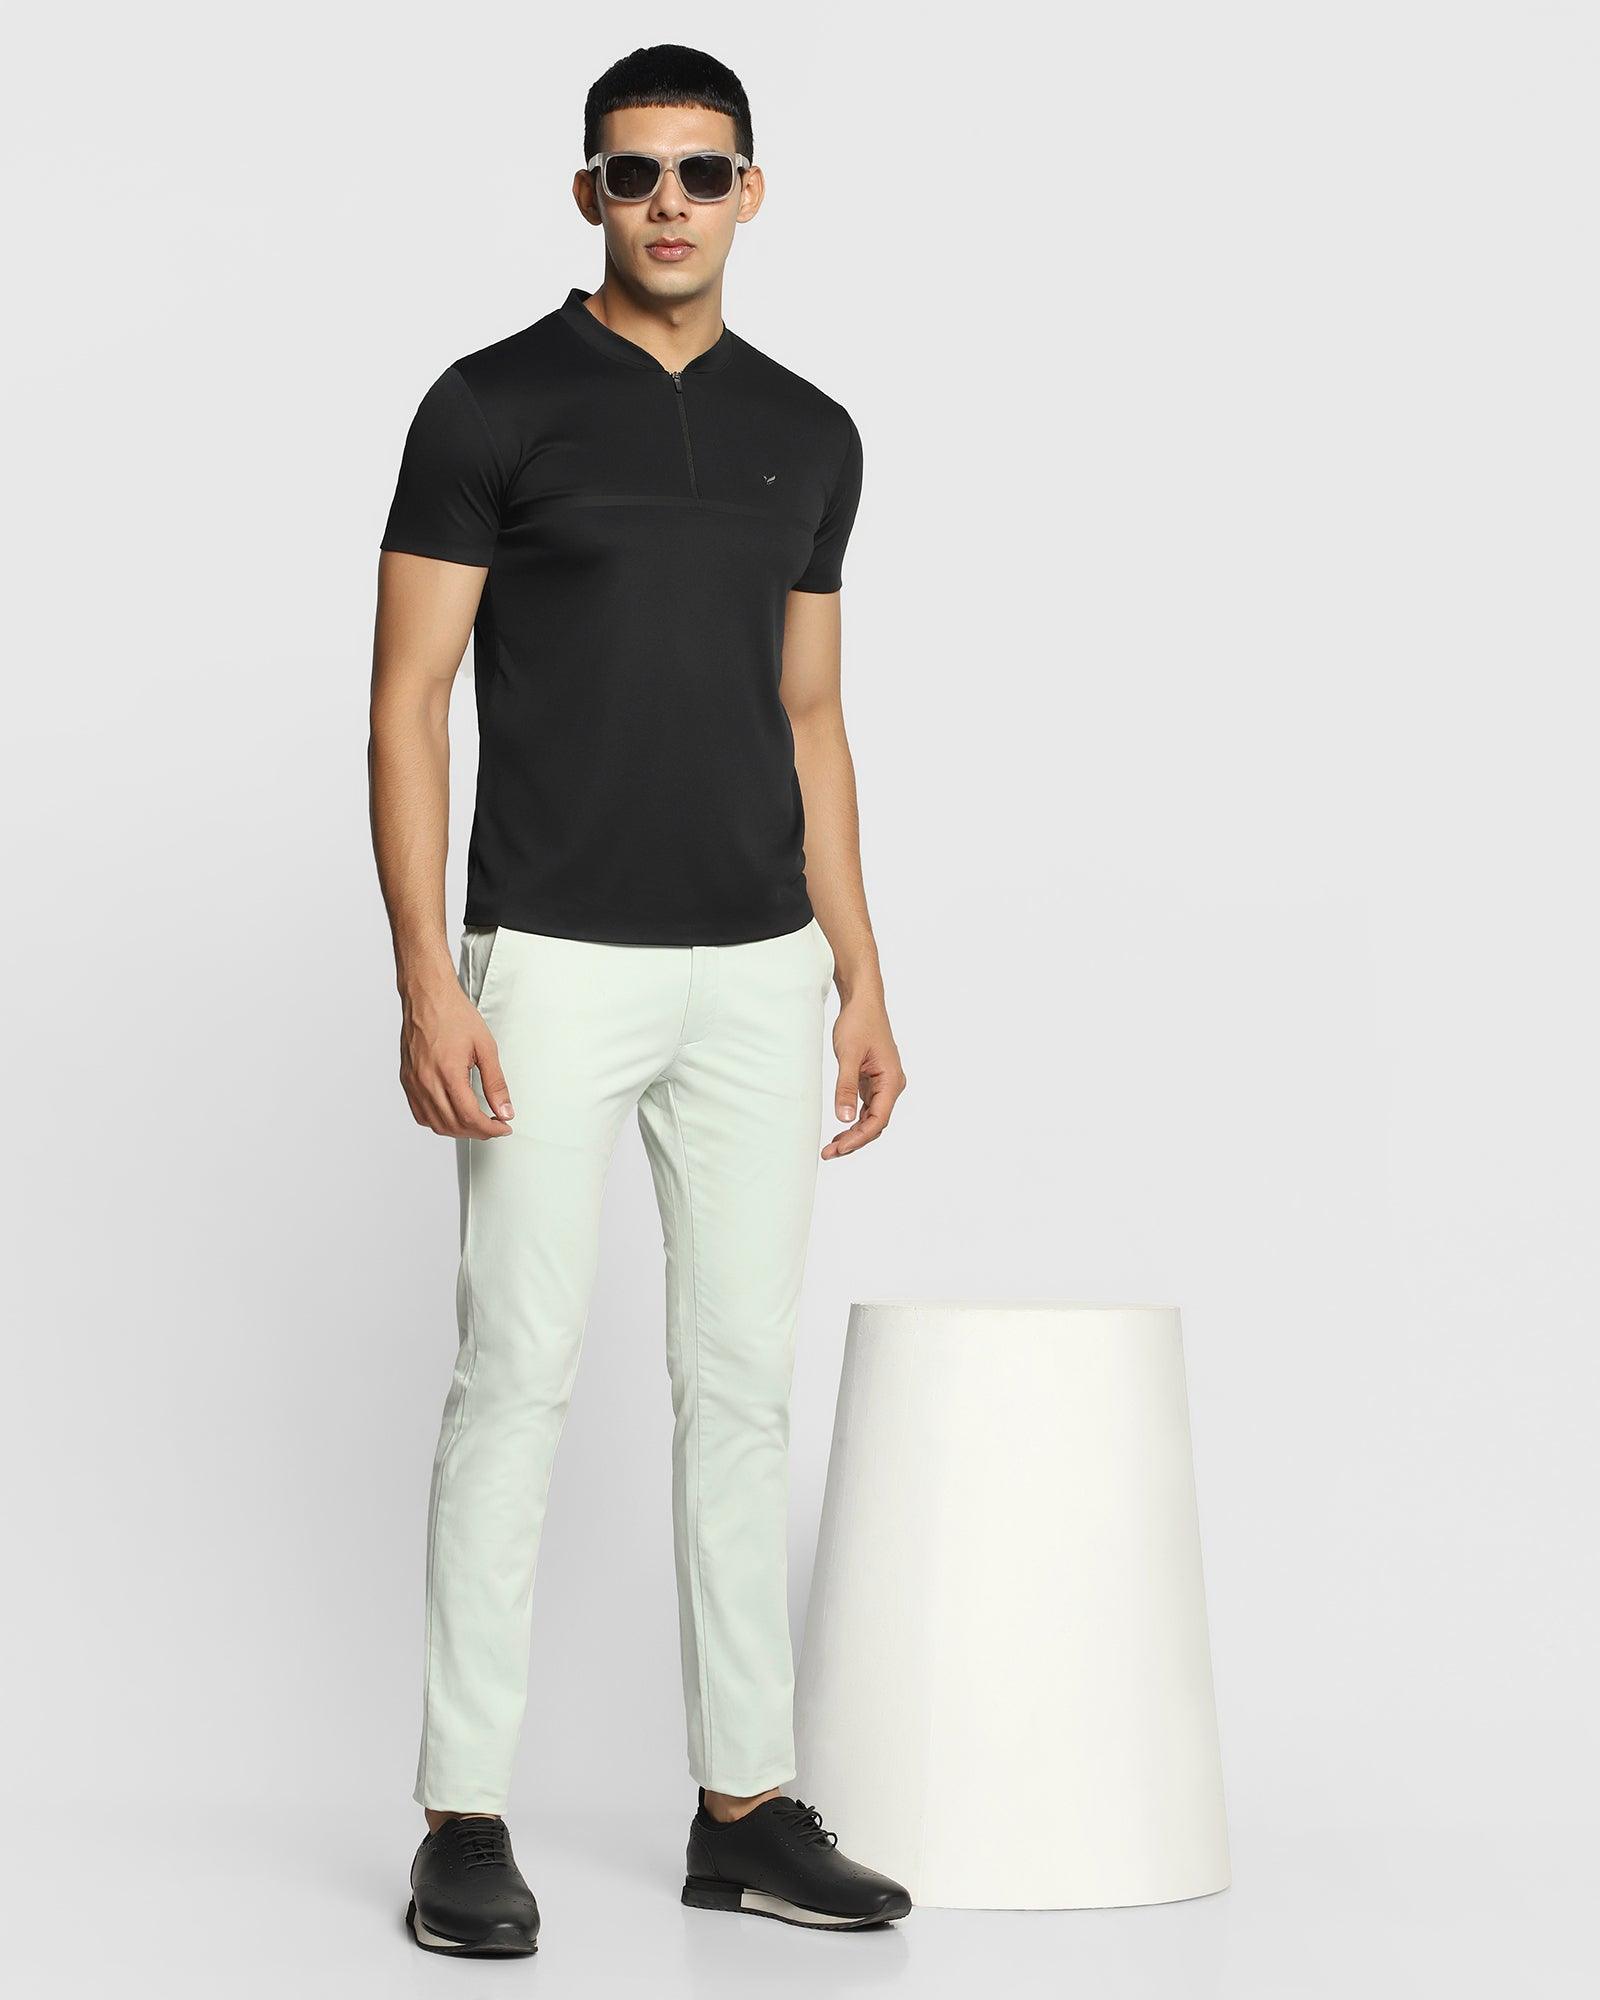 TechPro Stylized Collar Black Textured T Shirt - Bond